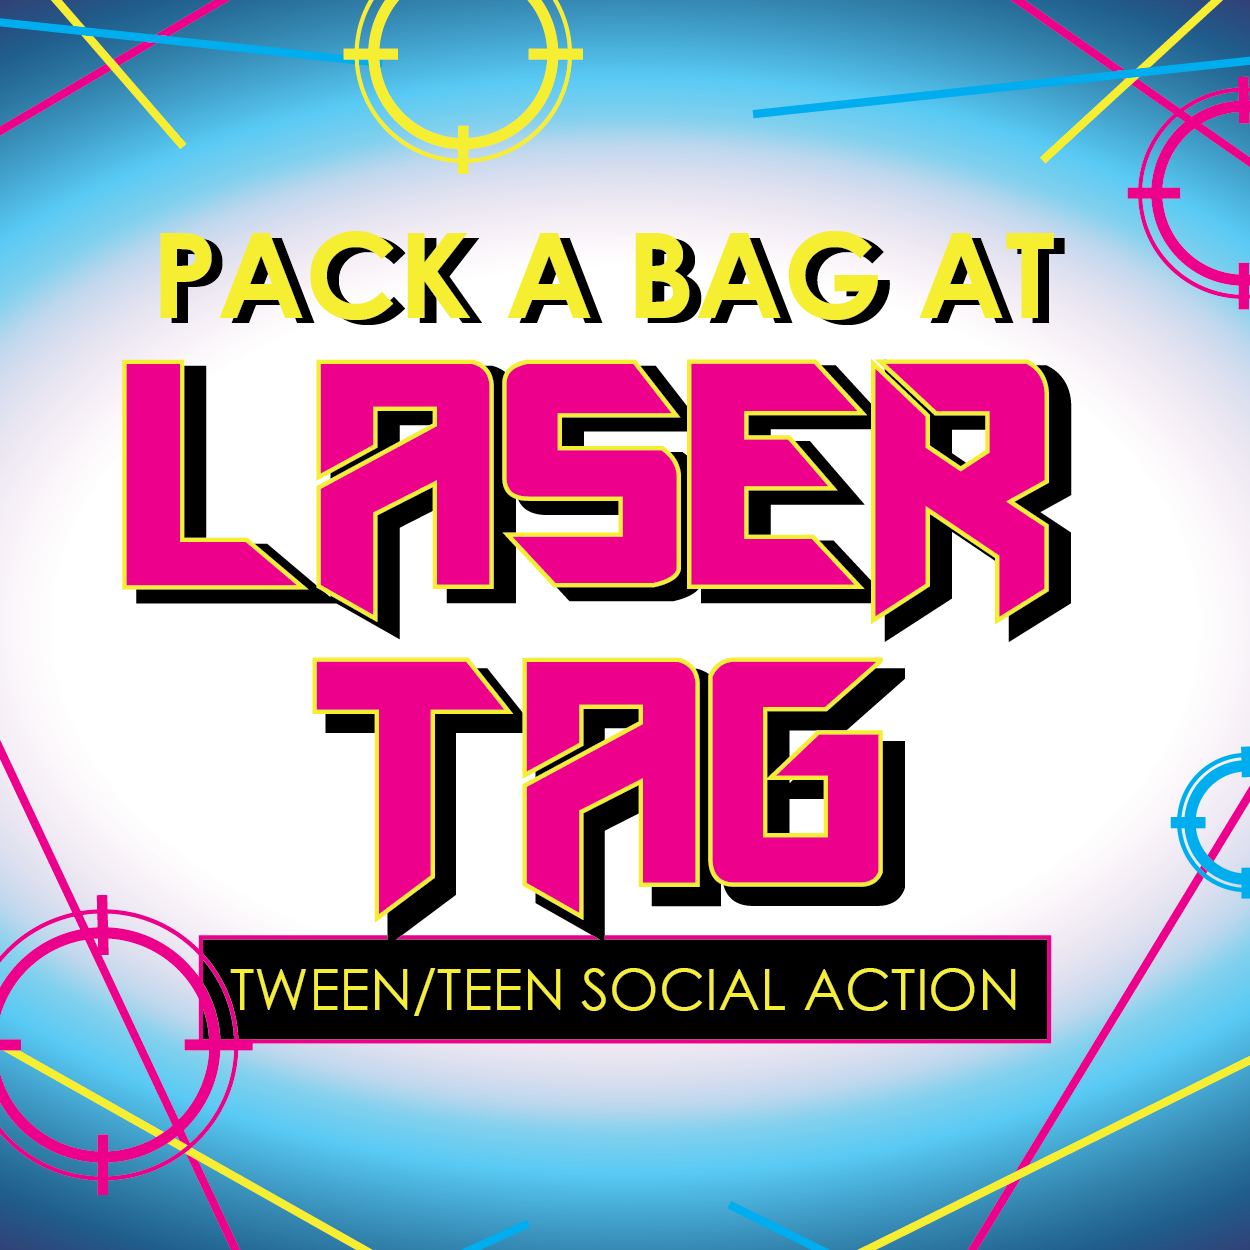 Pack a Bag at Laser Tag Tween/Teen Social Action